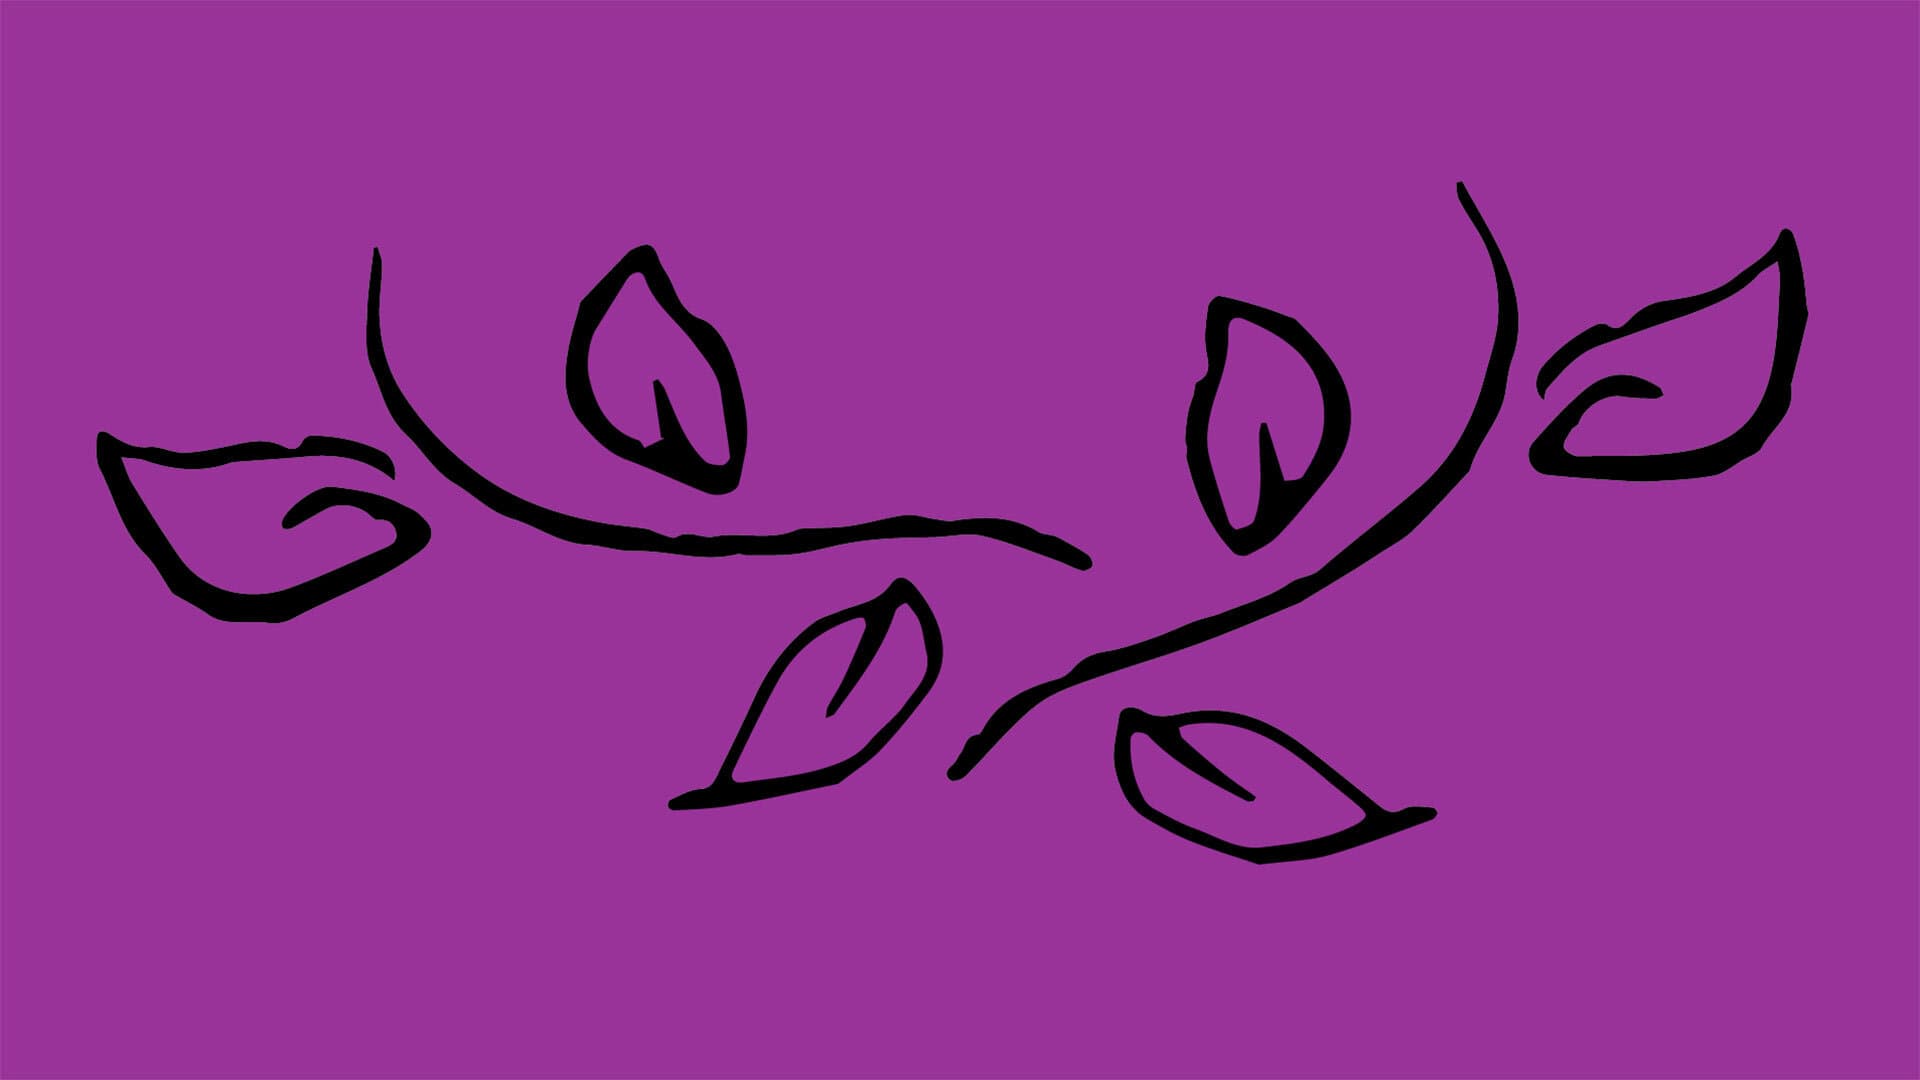 Illustration of leaves on a purple background